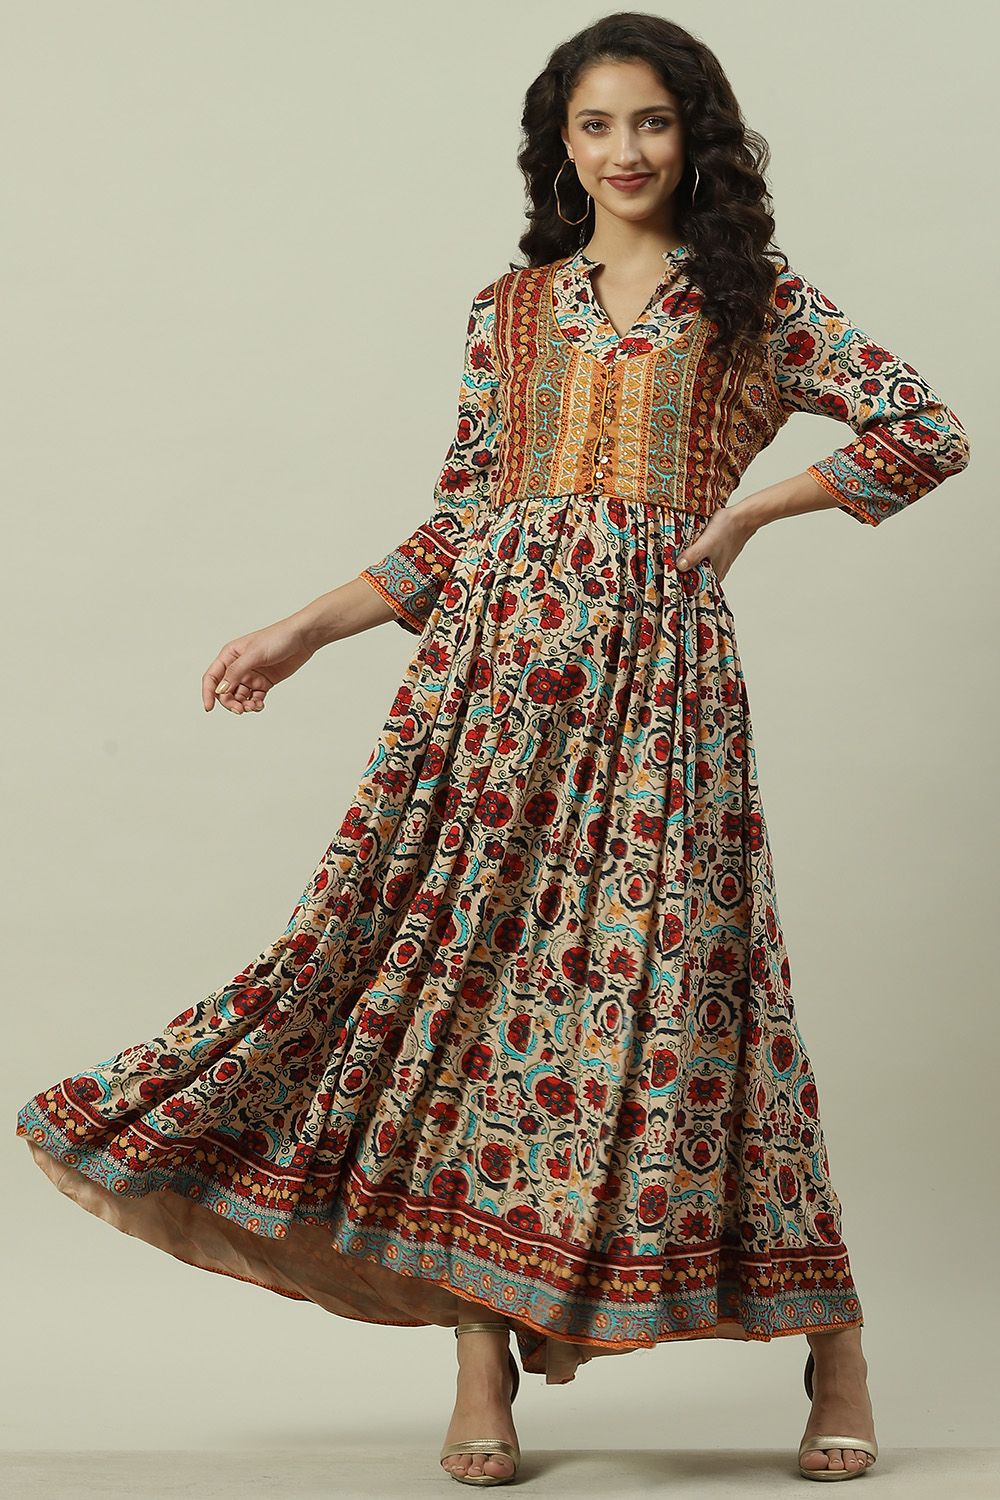 Ecru Rayon Flared Printed Dress Kurta, Jacket at Biba India